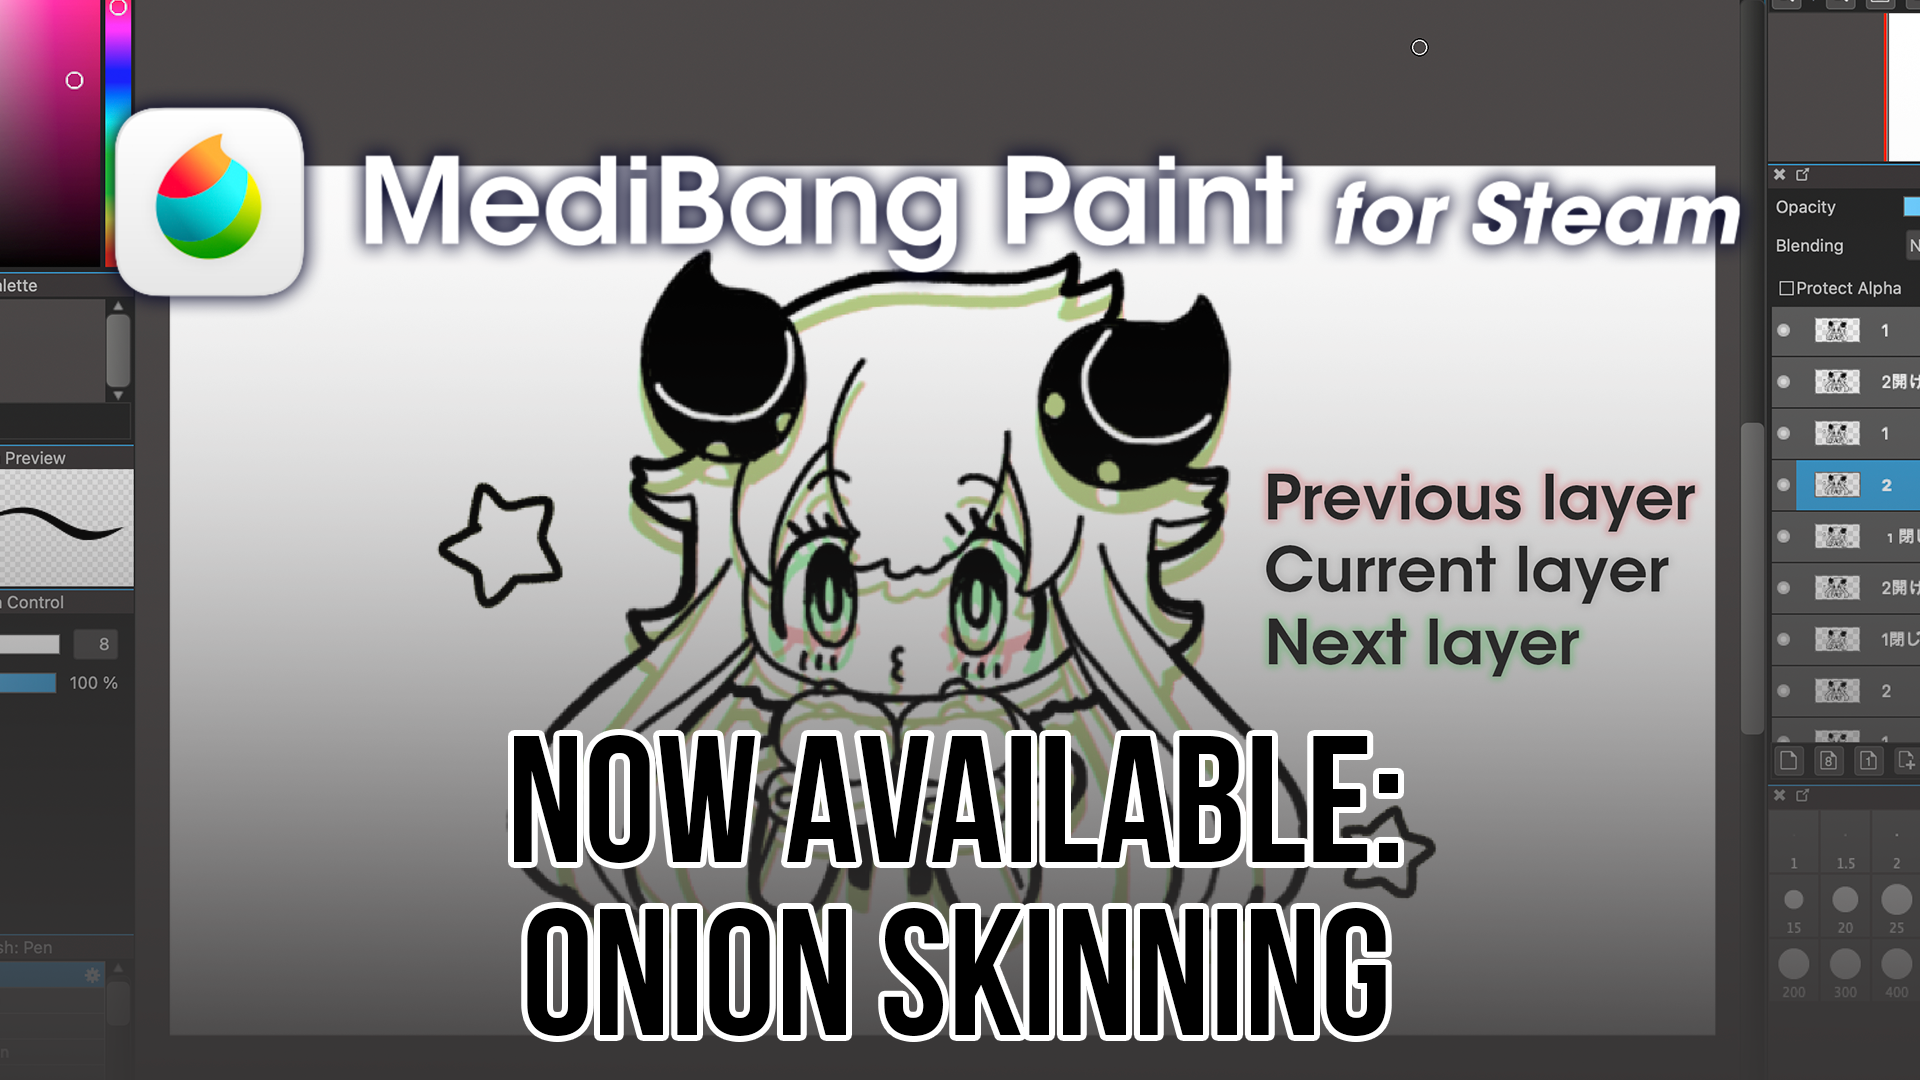 Sign up and login  MediBang Paint - the free digital painting and manga  creation software